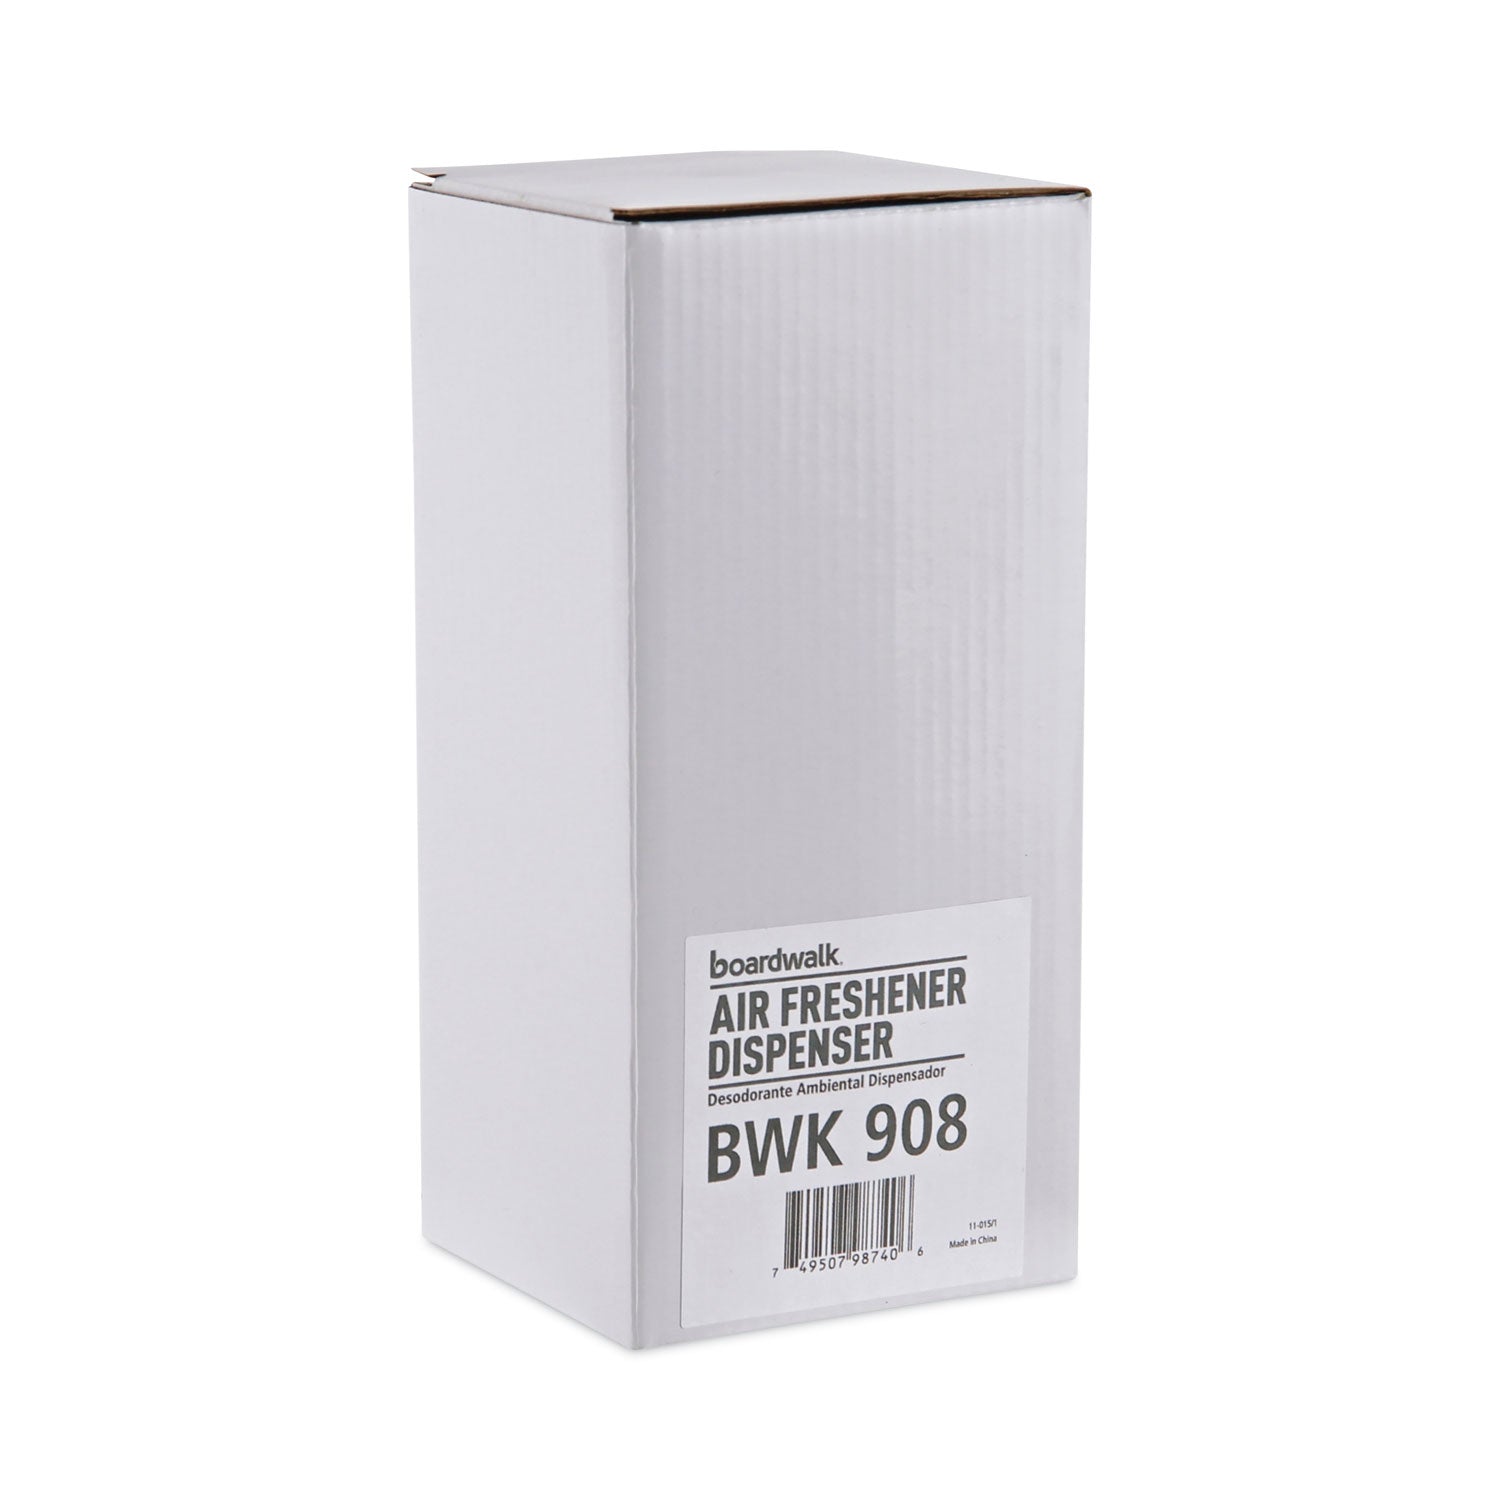 classic-metered-air-freshener-dispenser-4-x-3-x-95-white_bwk908 - 8